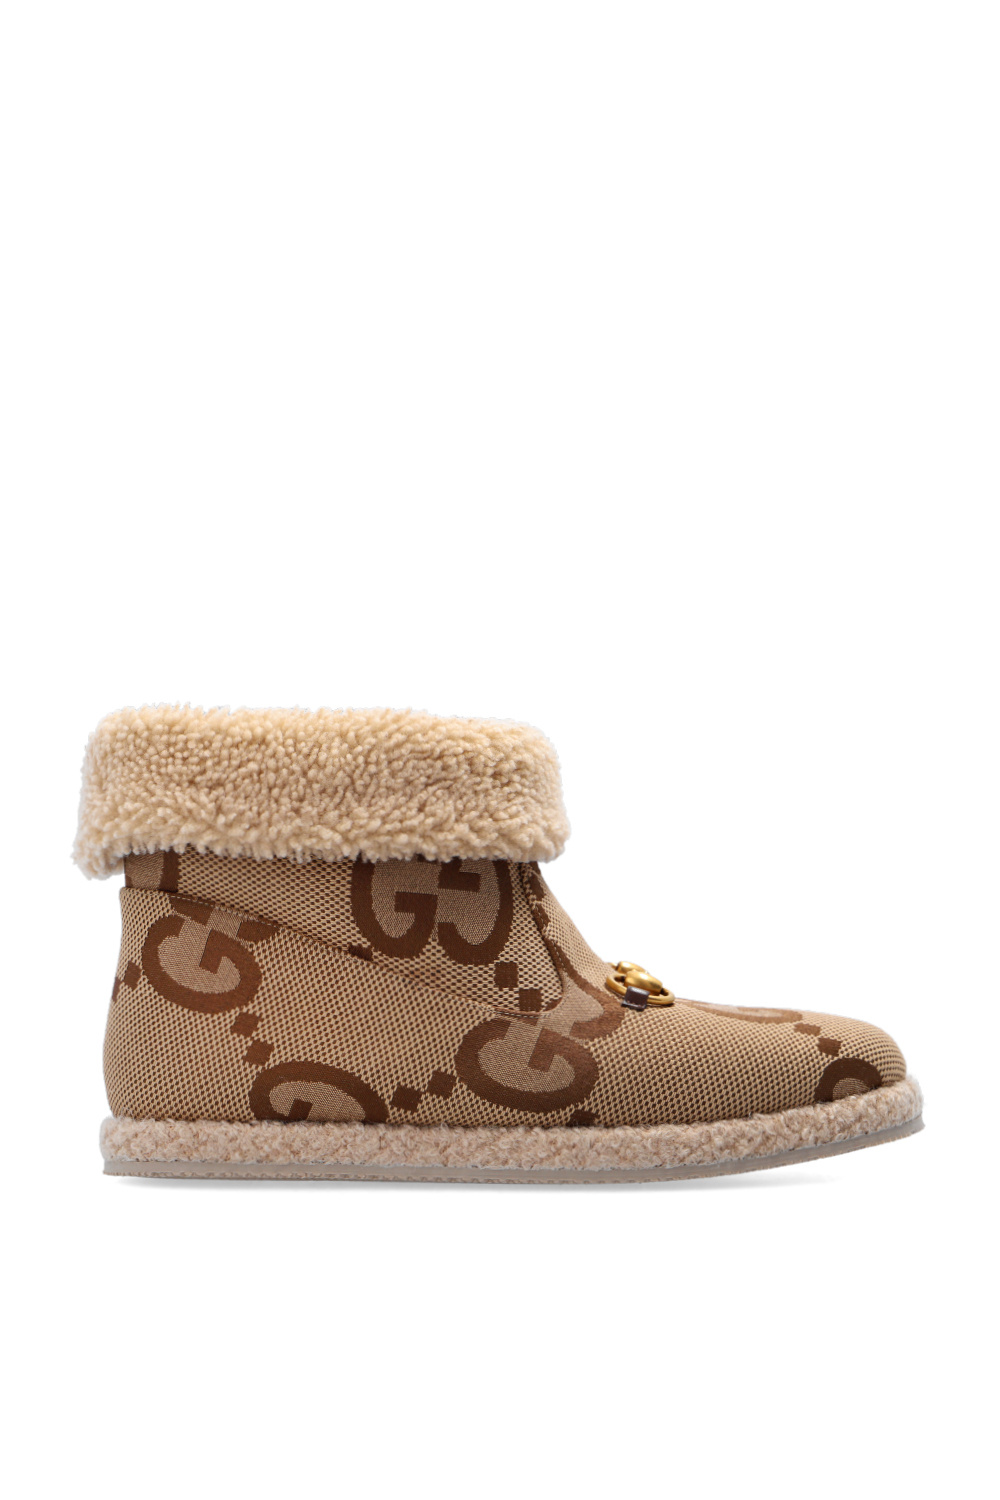 Gucci GG Supreme ankle boots | Women's Shoes | Vitkac